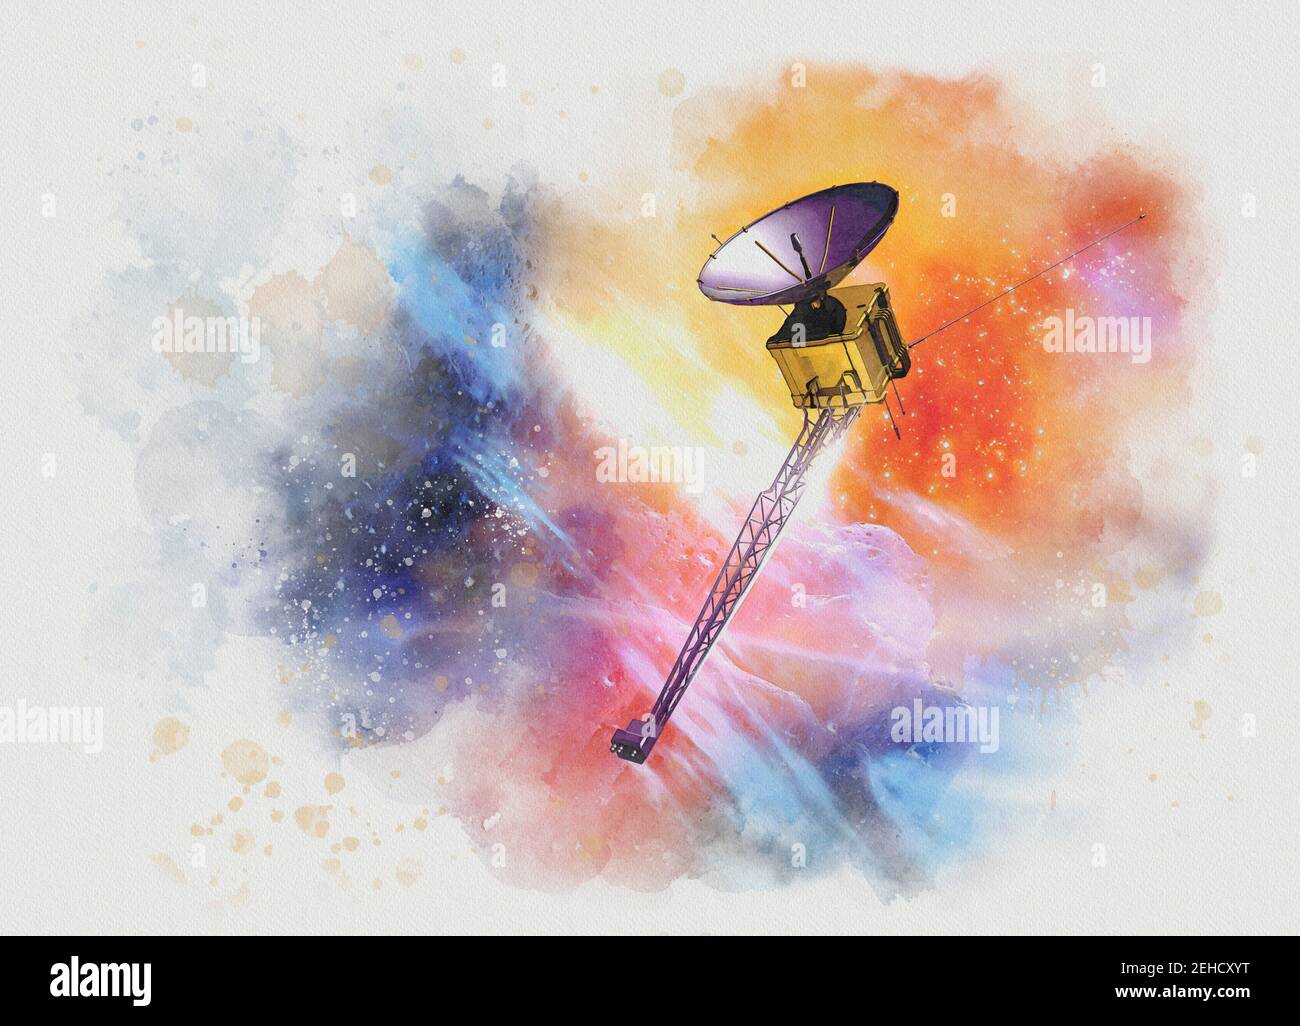 Deep space probe, conceptual illustration Stock Photo